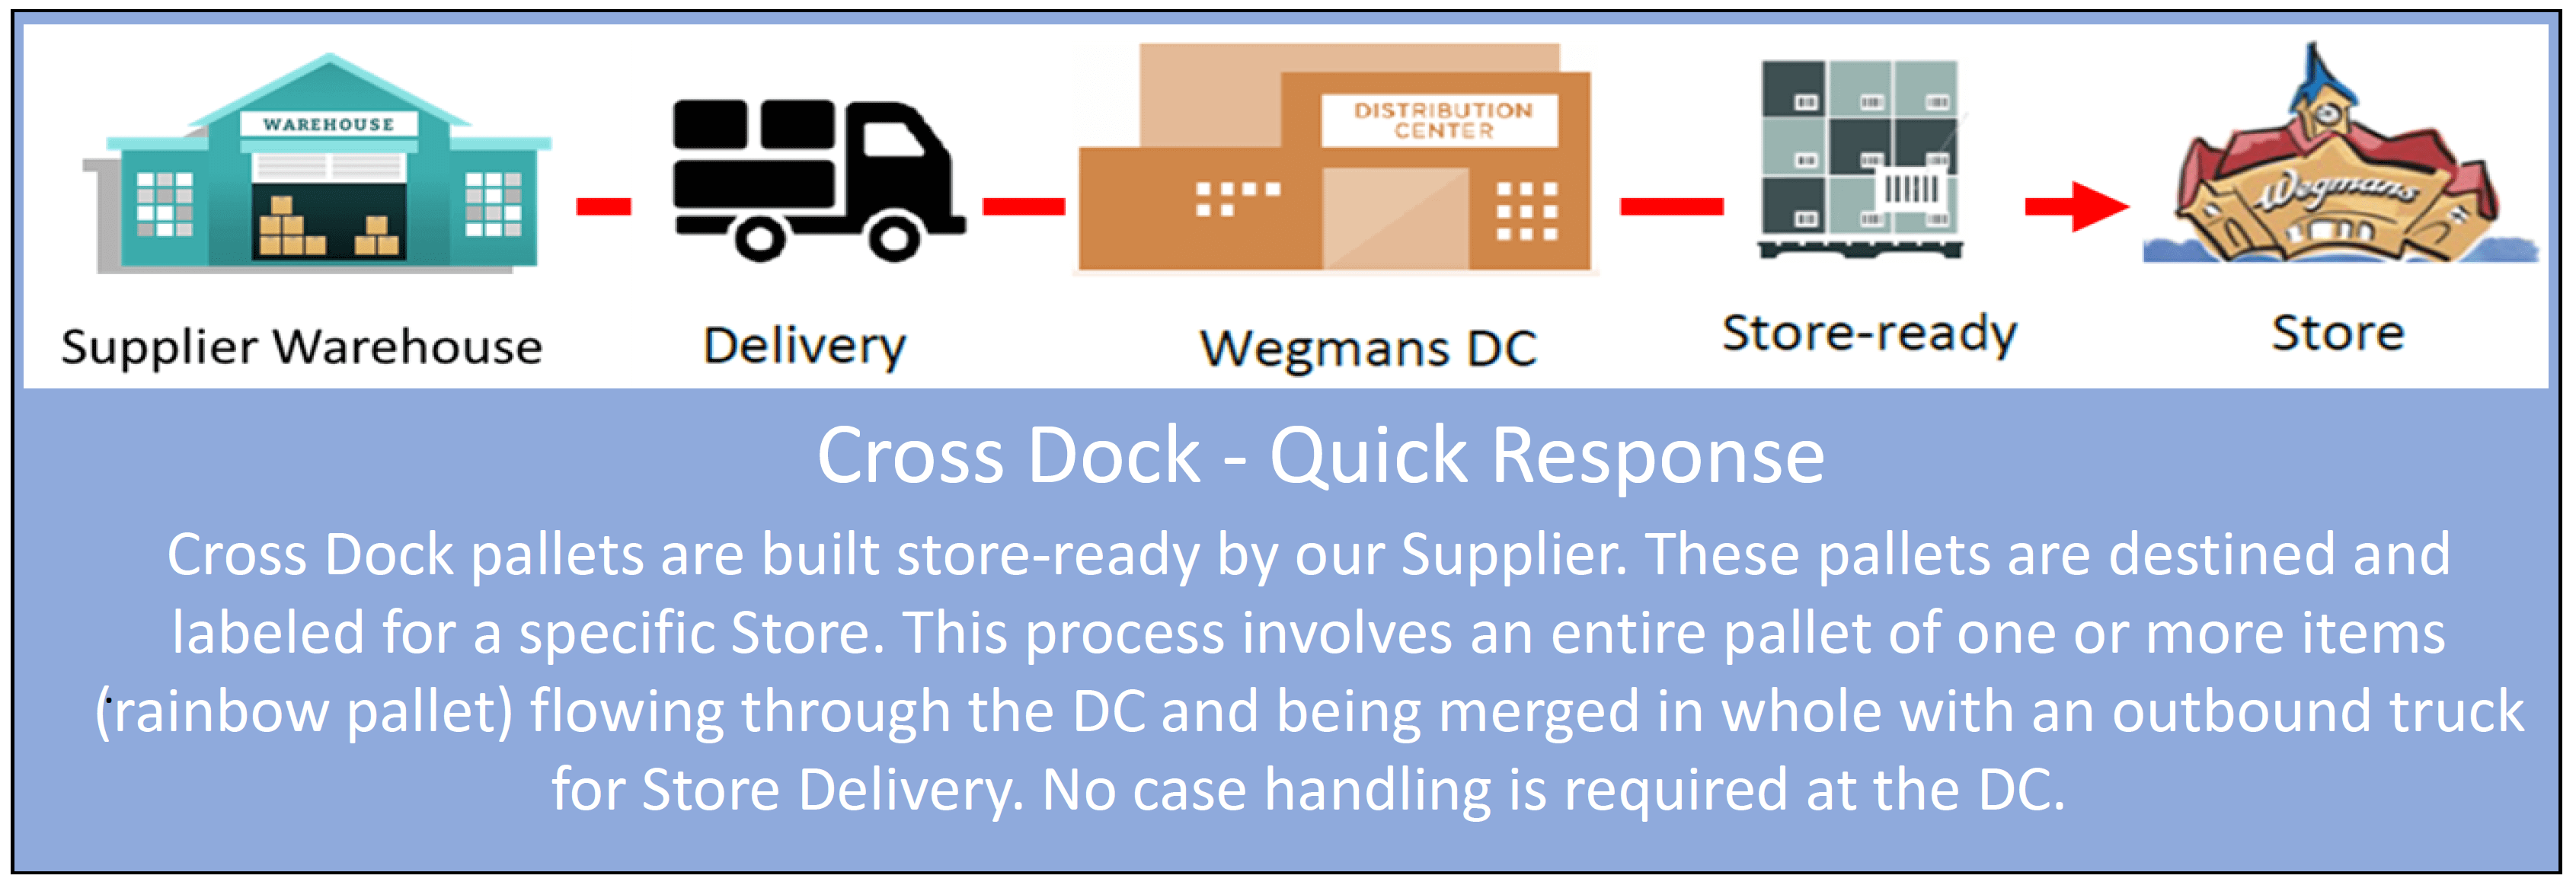 Wegmans Supply Chain Cross Dock - Quick Response